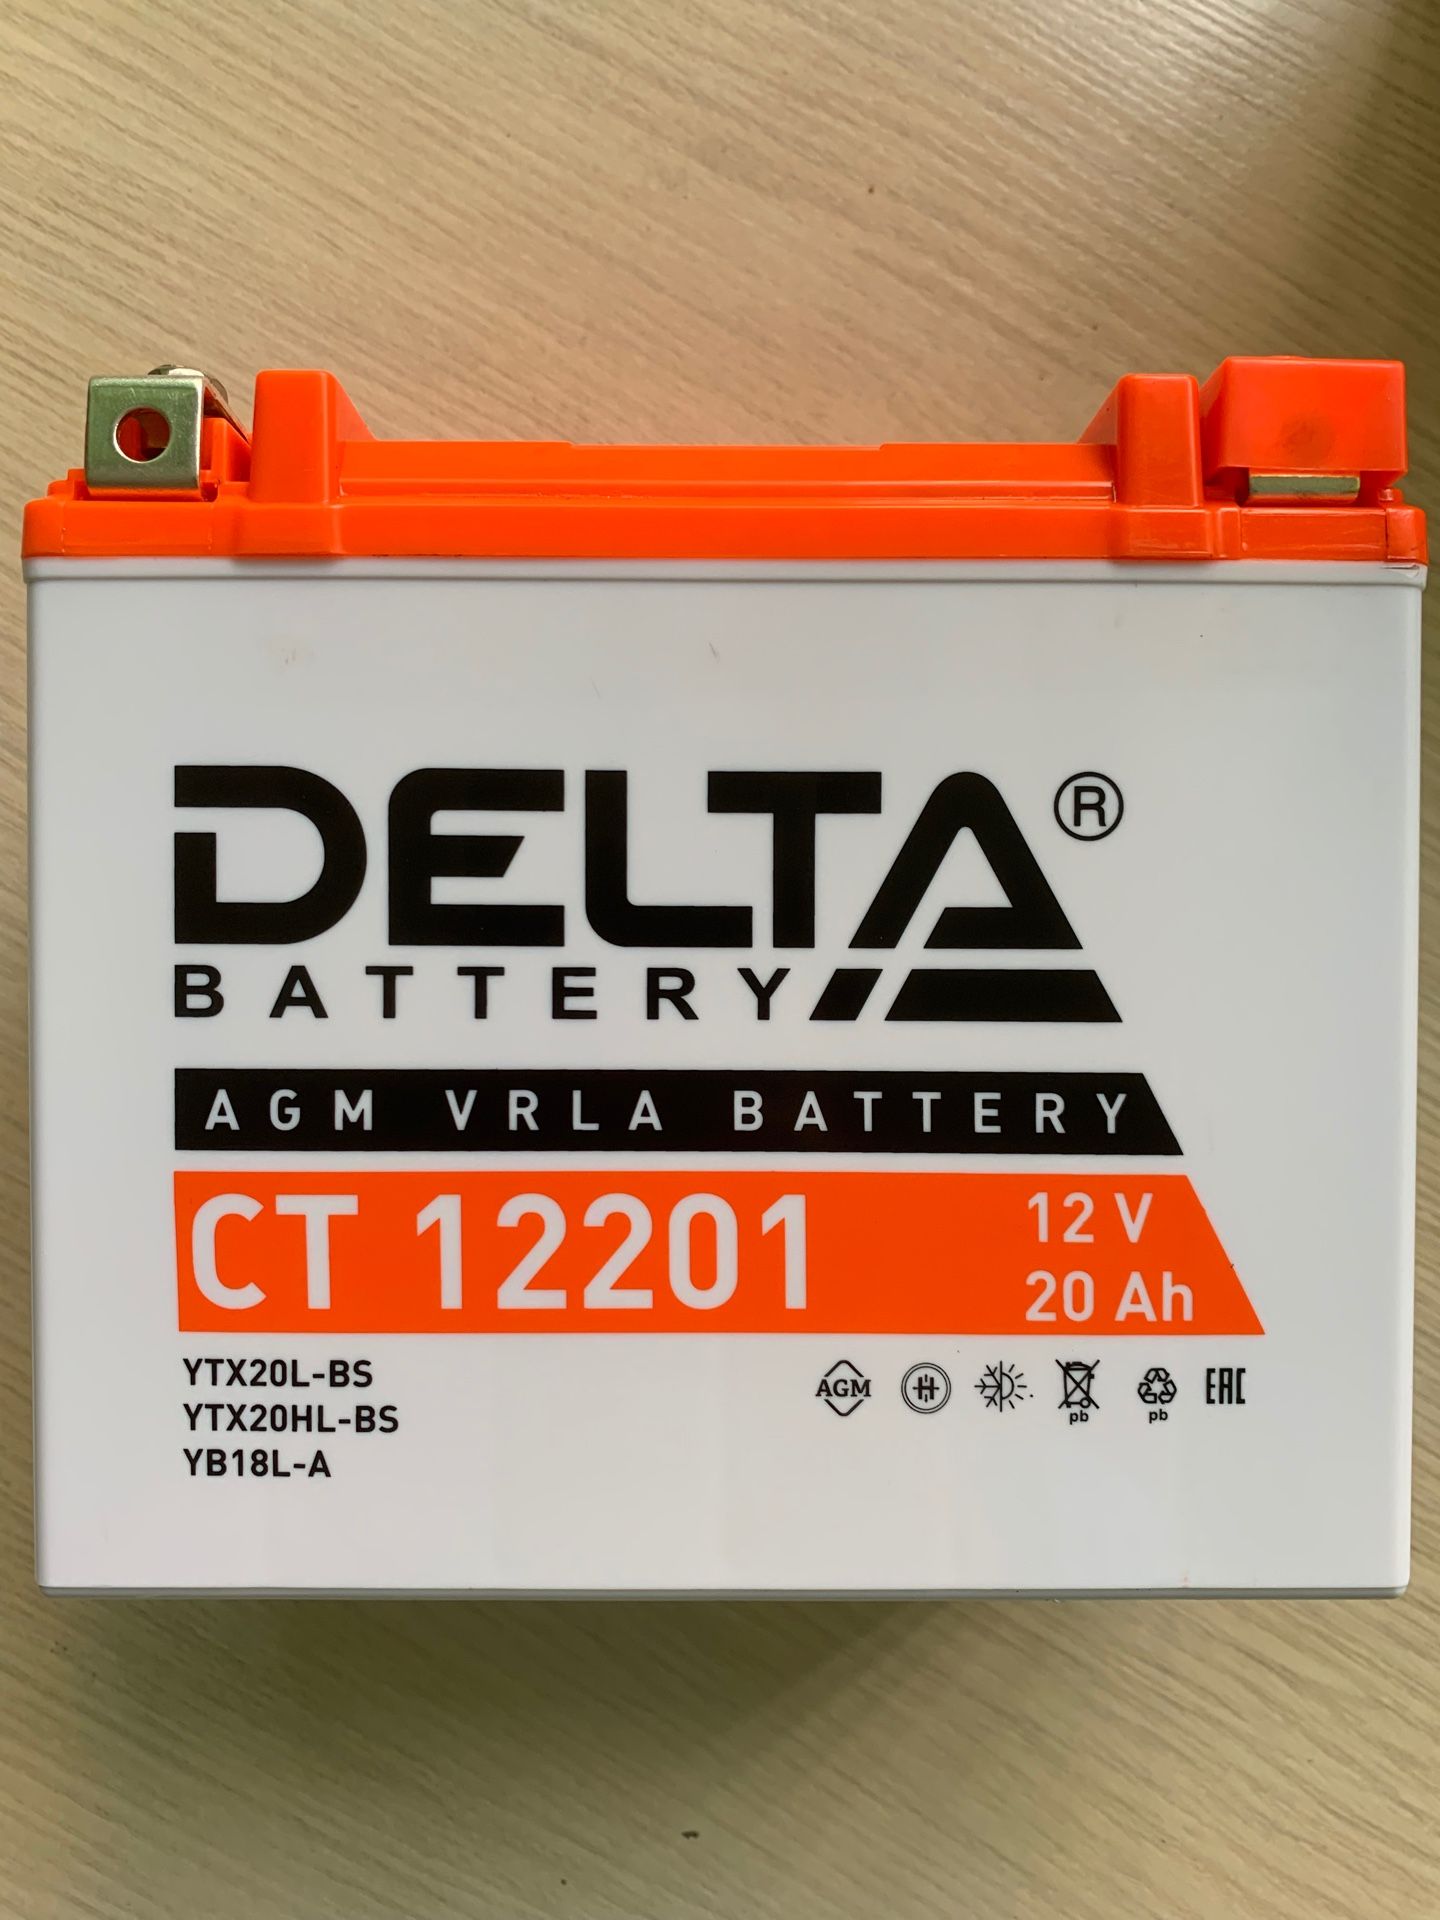 Аккумулятор 20 ампер час. Delta CT 12201 (12в/20ач). Delta АКБ Delta 20 Ач eps 12201 (ytx20l-BS). Ct12201 Delta. Аккумулятор Дельта 12201.